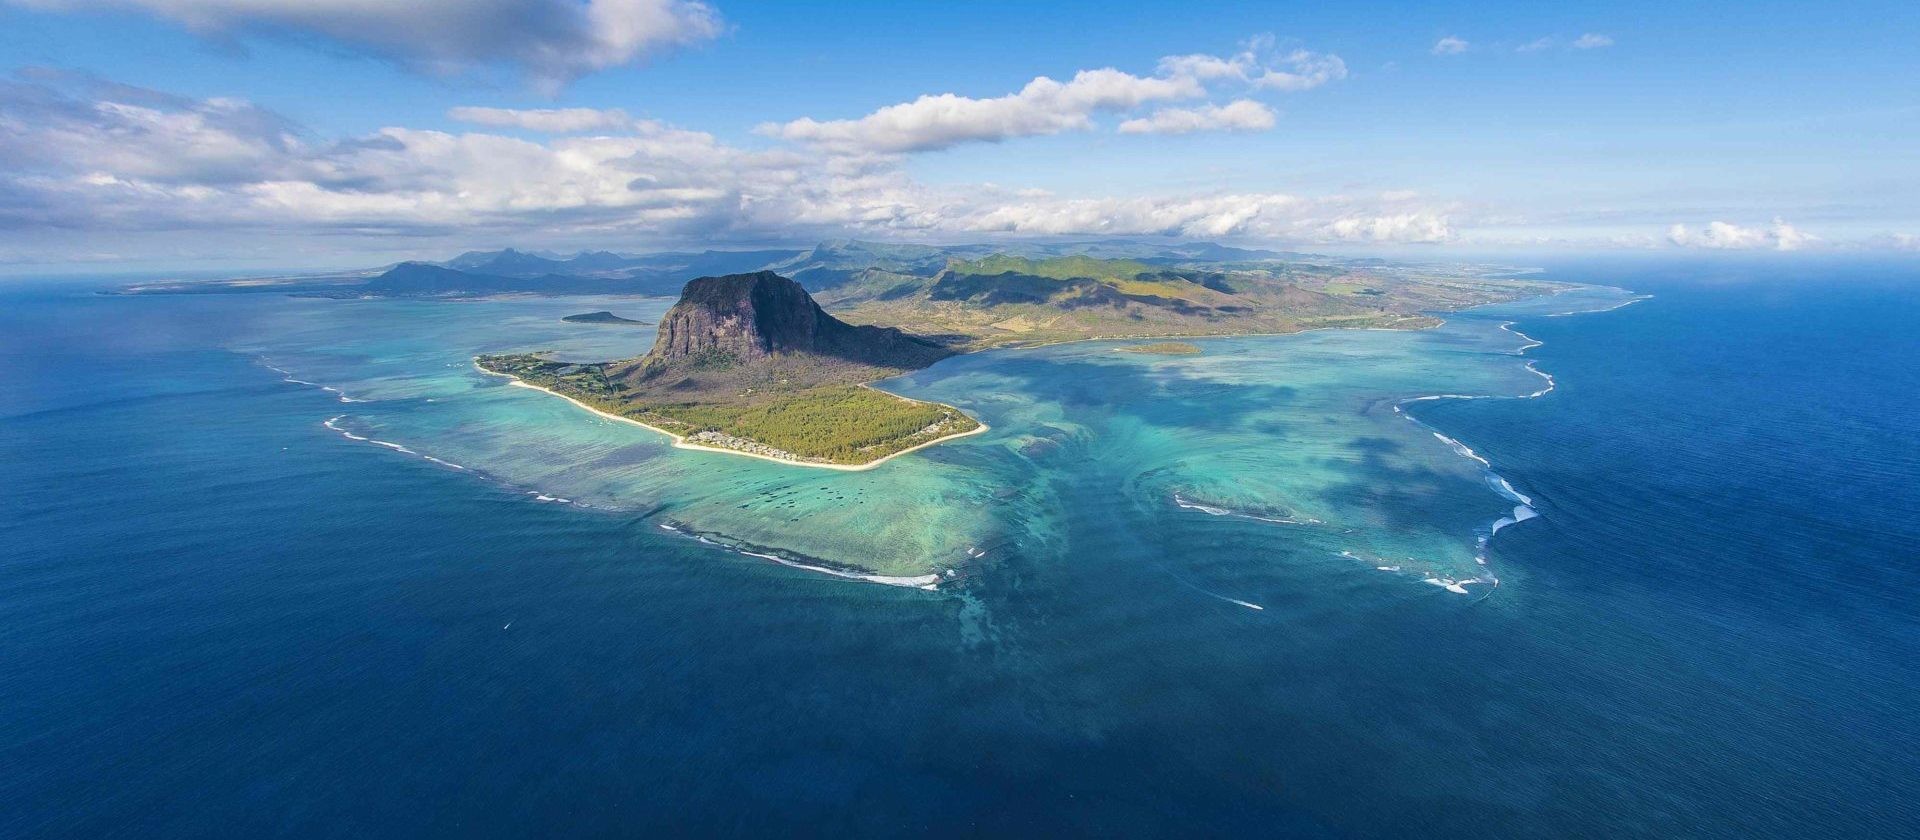 Mauritius, Ocean Indyjski: rejs katamaranem